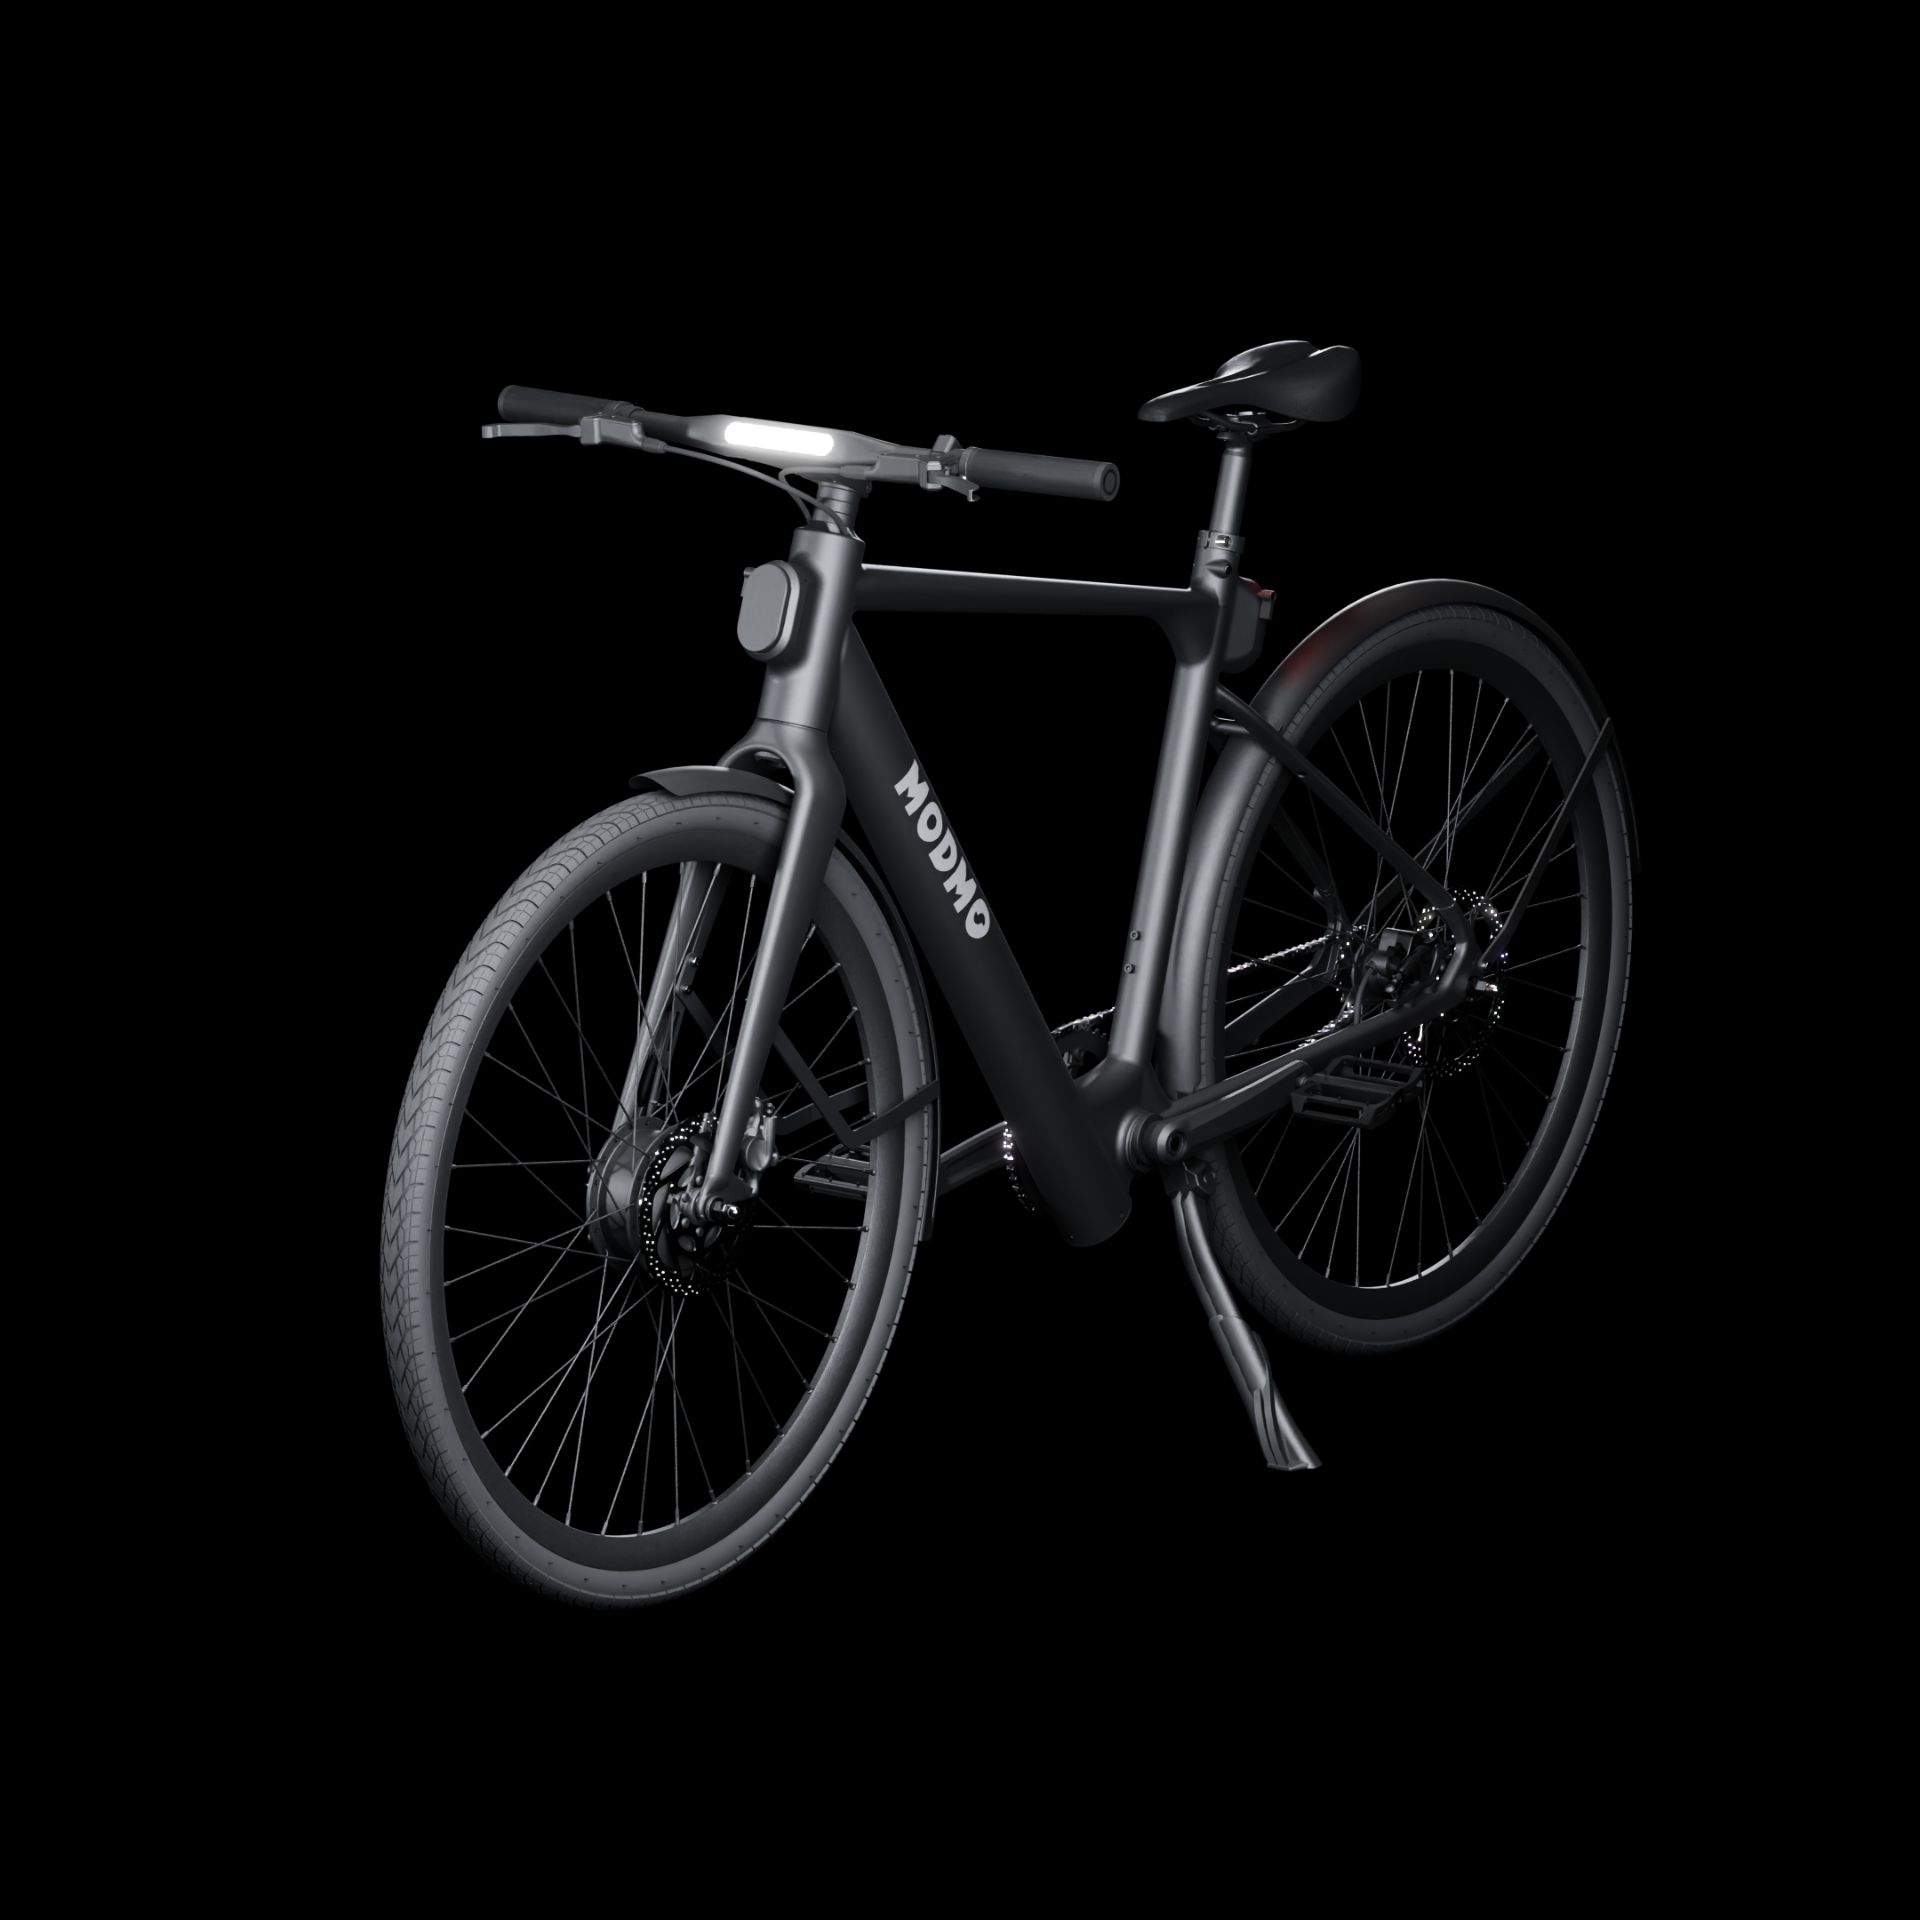 Modmo Saigon+ Electric Bicycle - RRP £2800 - Size L (Rider 175-190cm) - Image 2 of 19